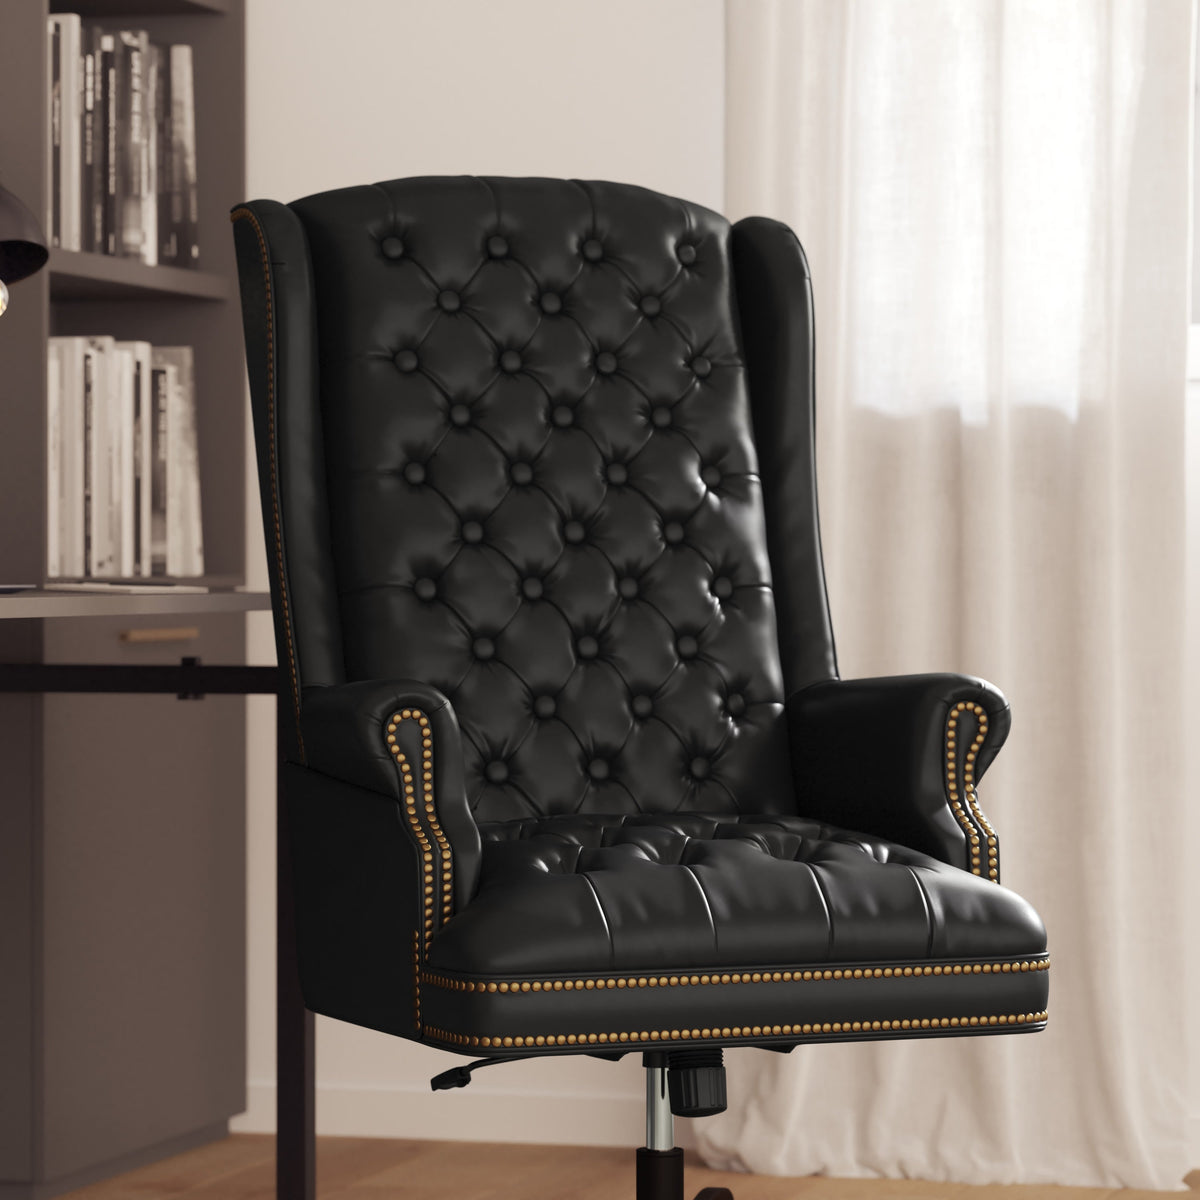 Black |#| High Back Tufted Black LeatherSoft Executive Swivel Ergonomic Office Chair